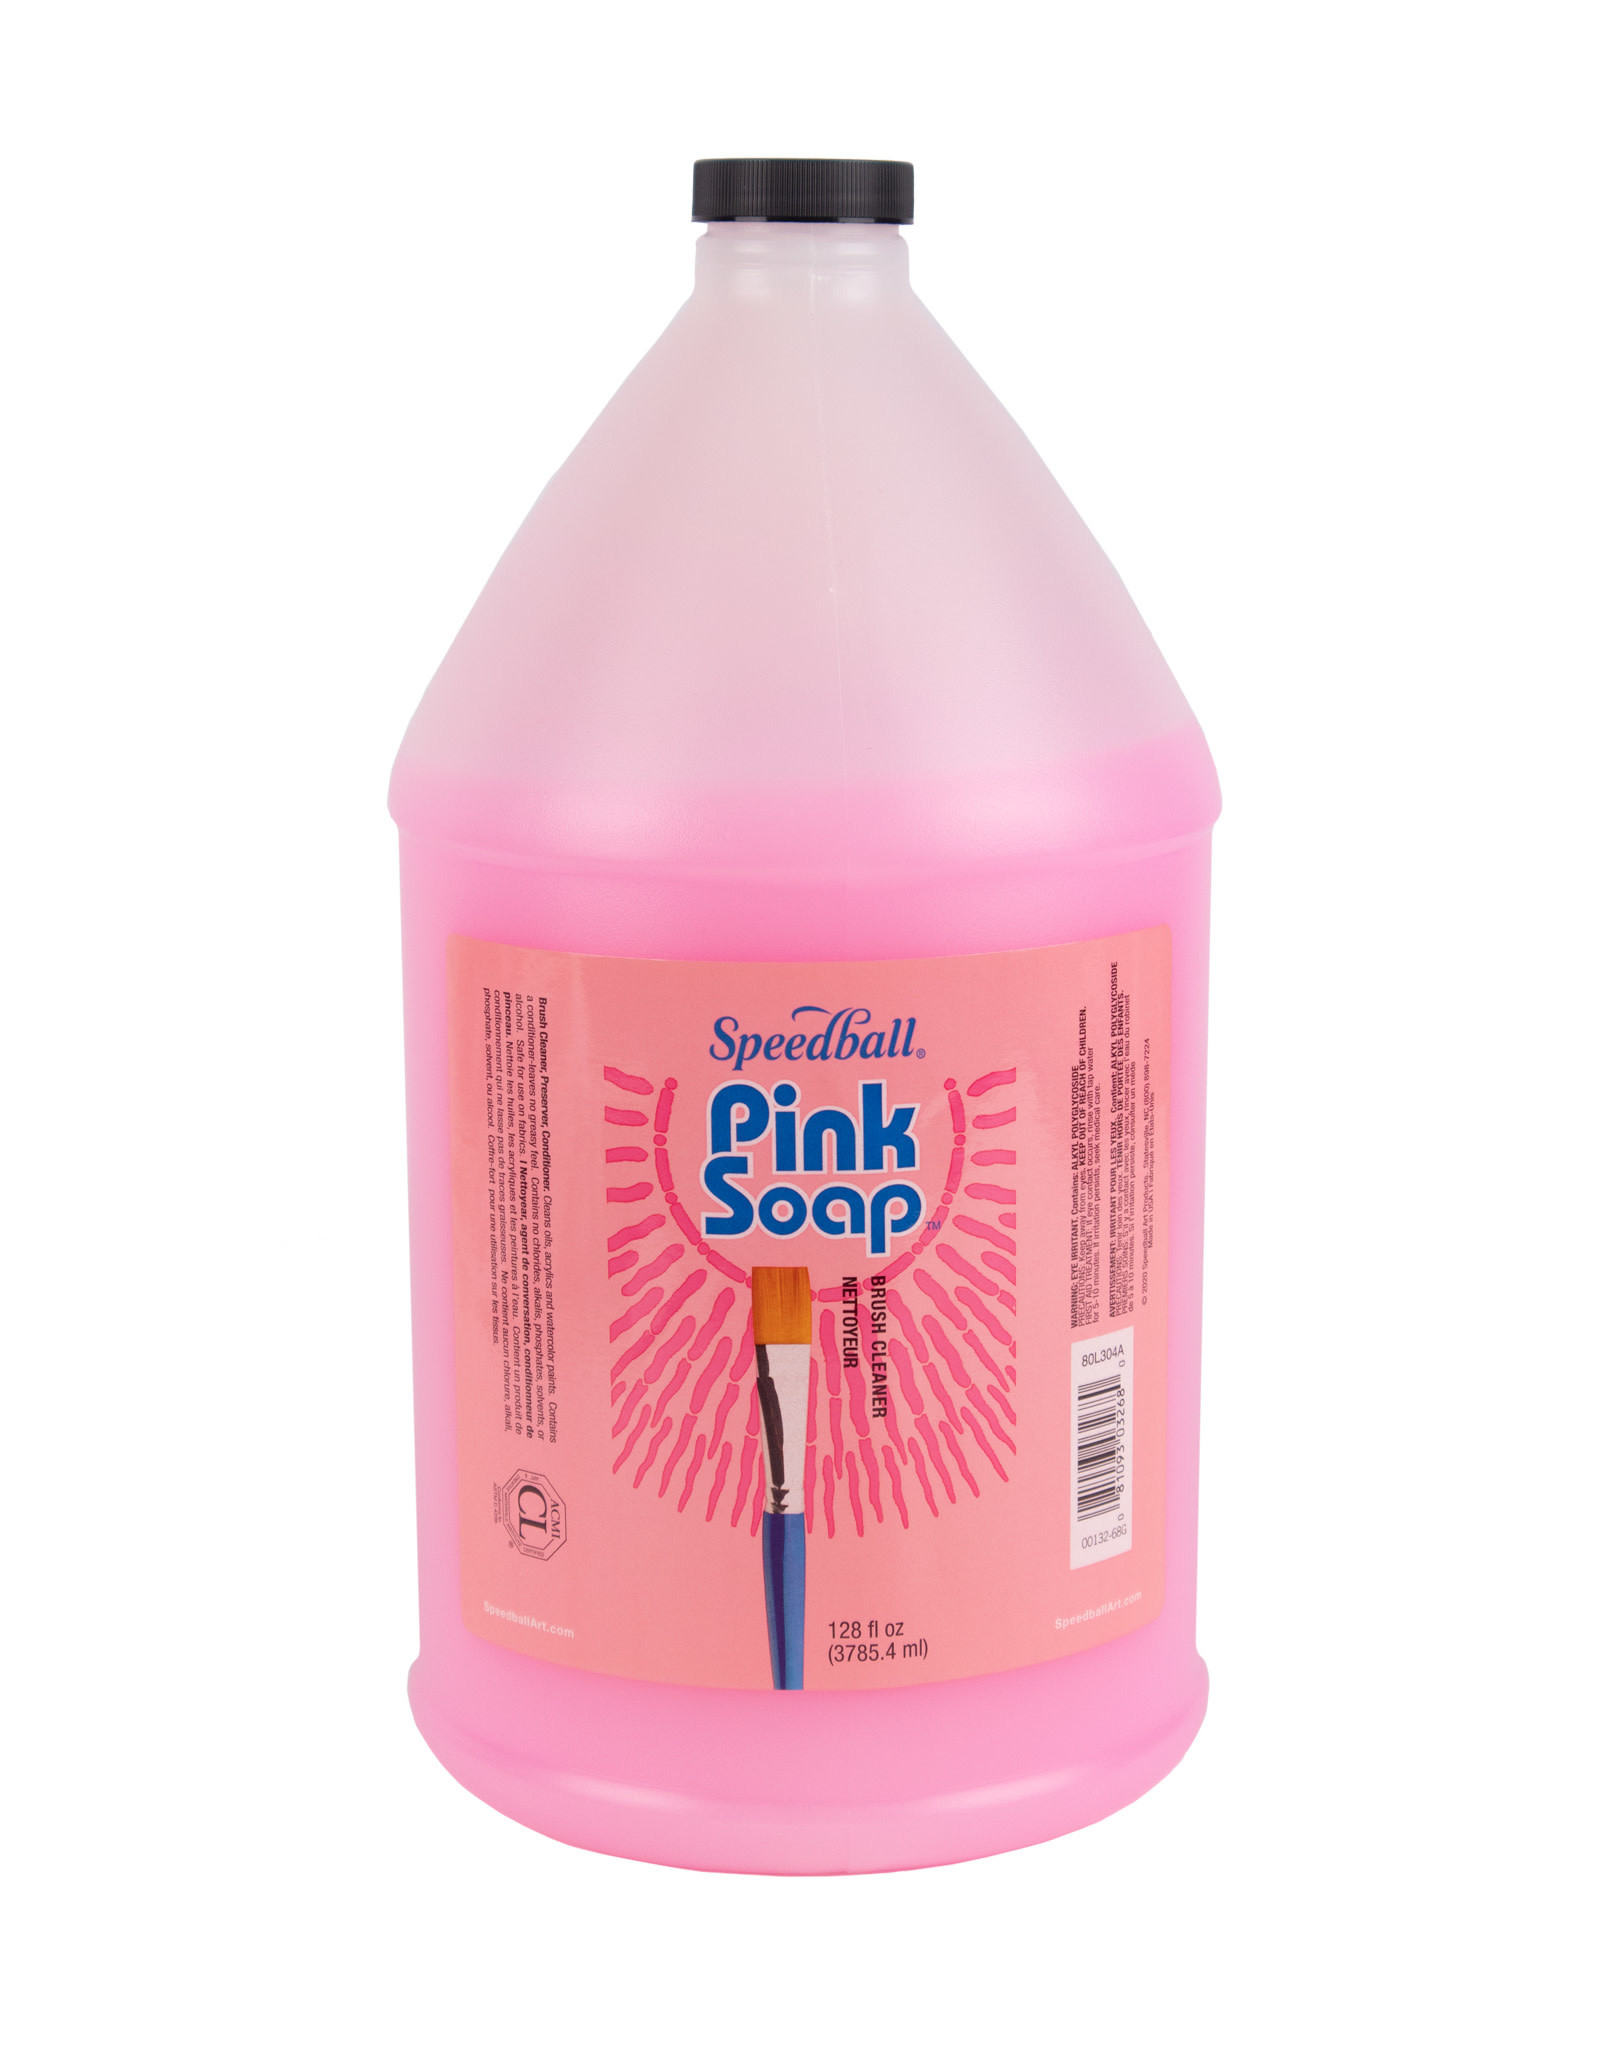 SPEEDBALL ART PRODUCTS Mona Lisa Pink Soap 1 Gallon